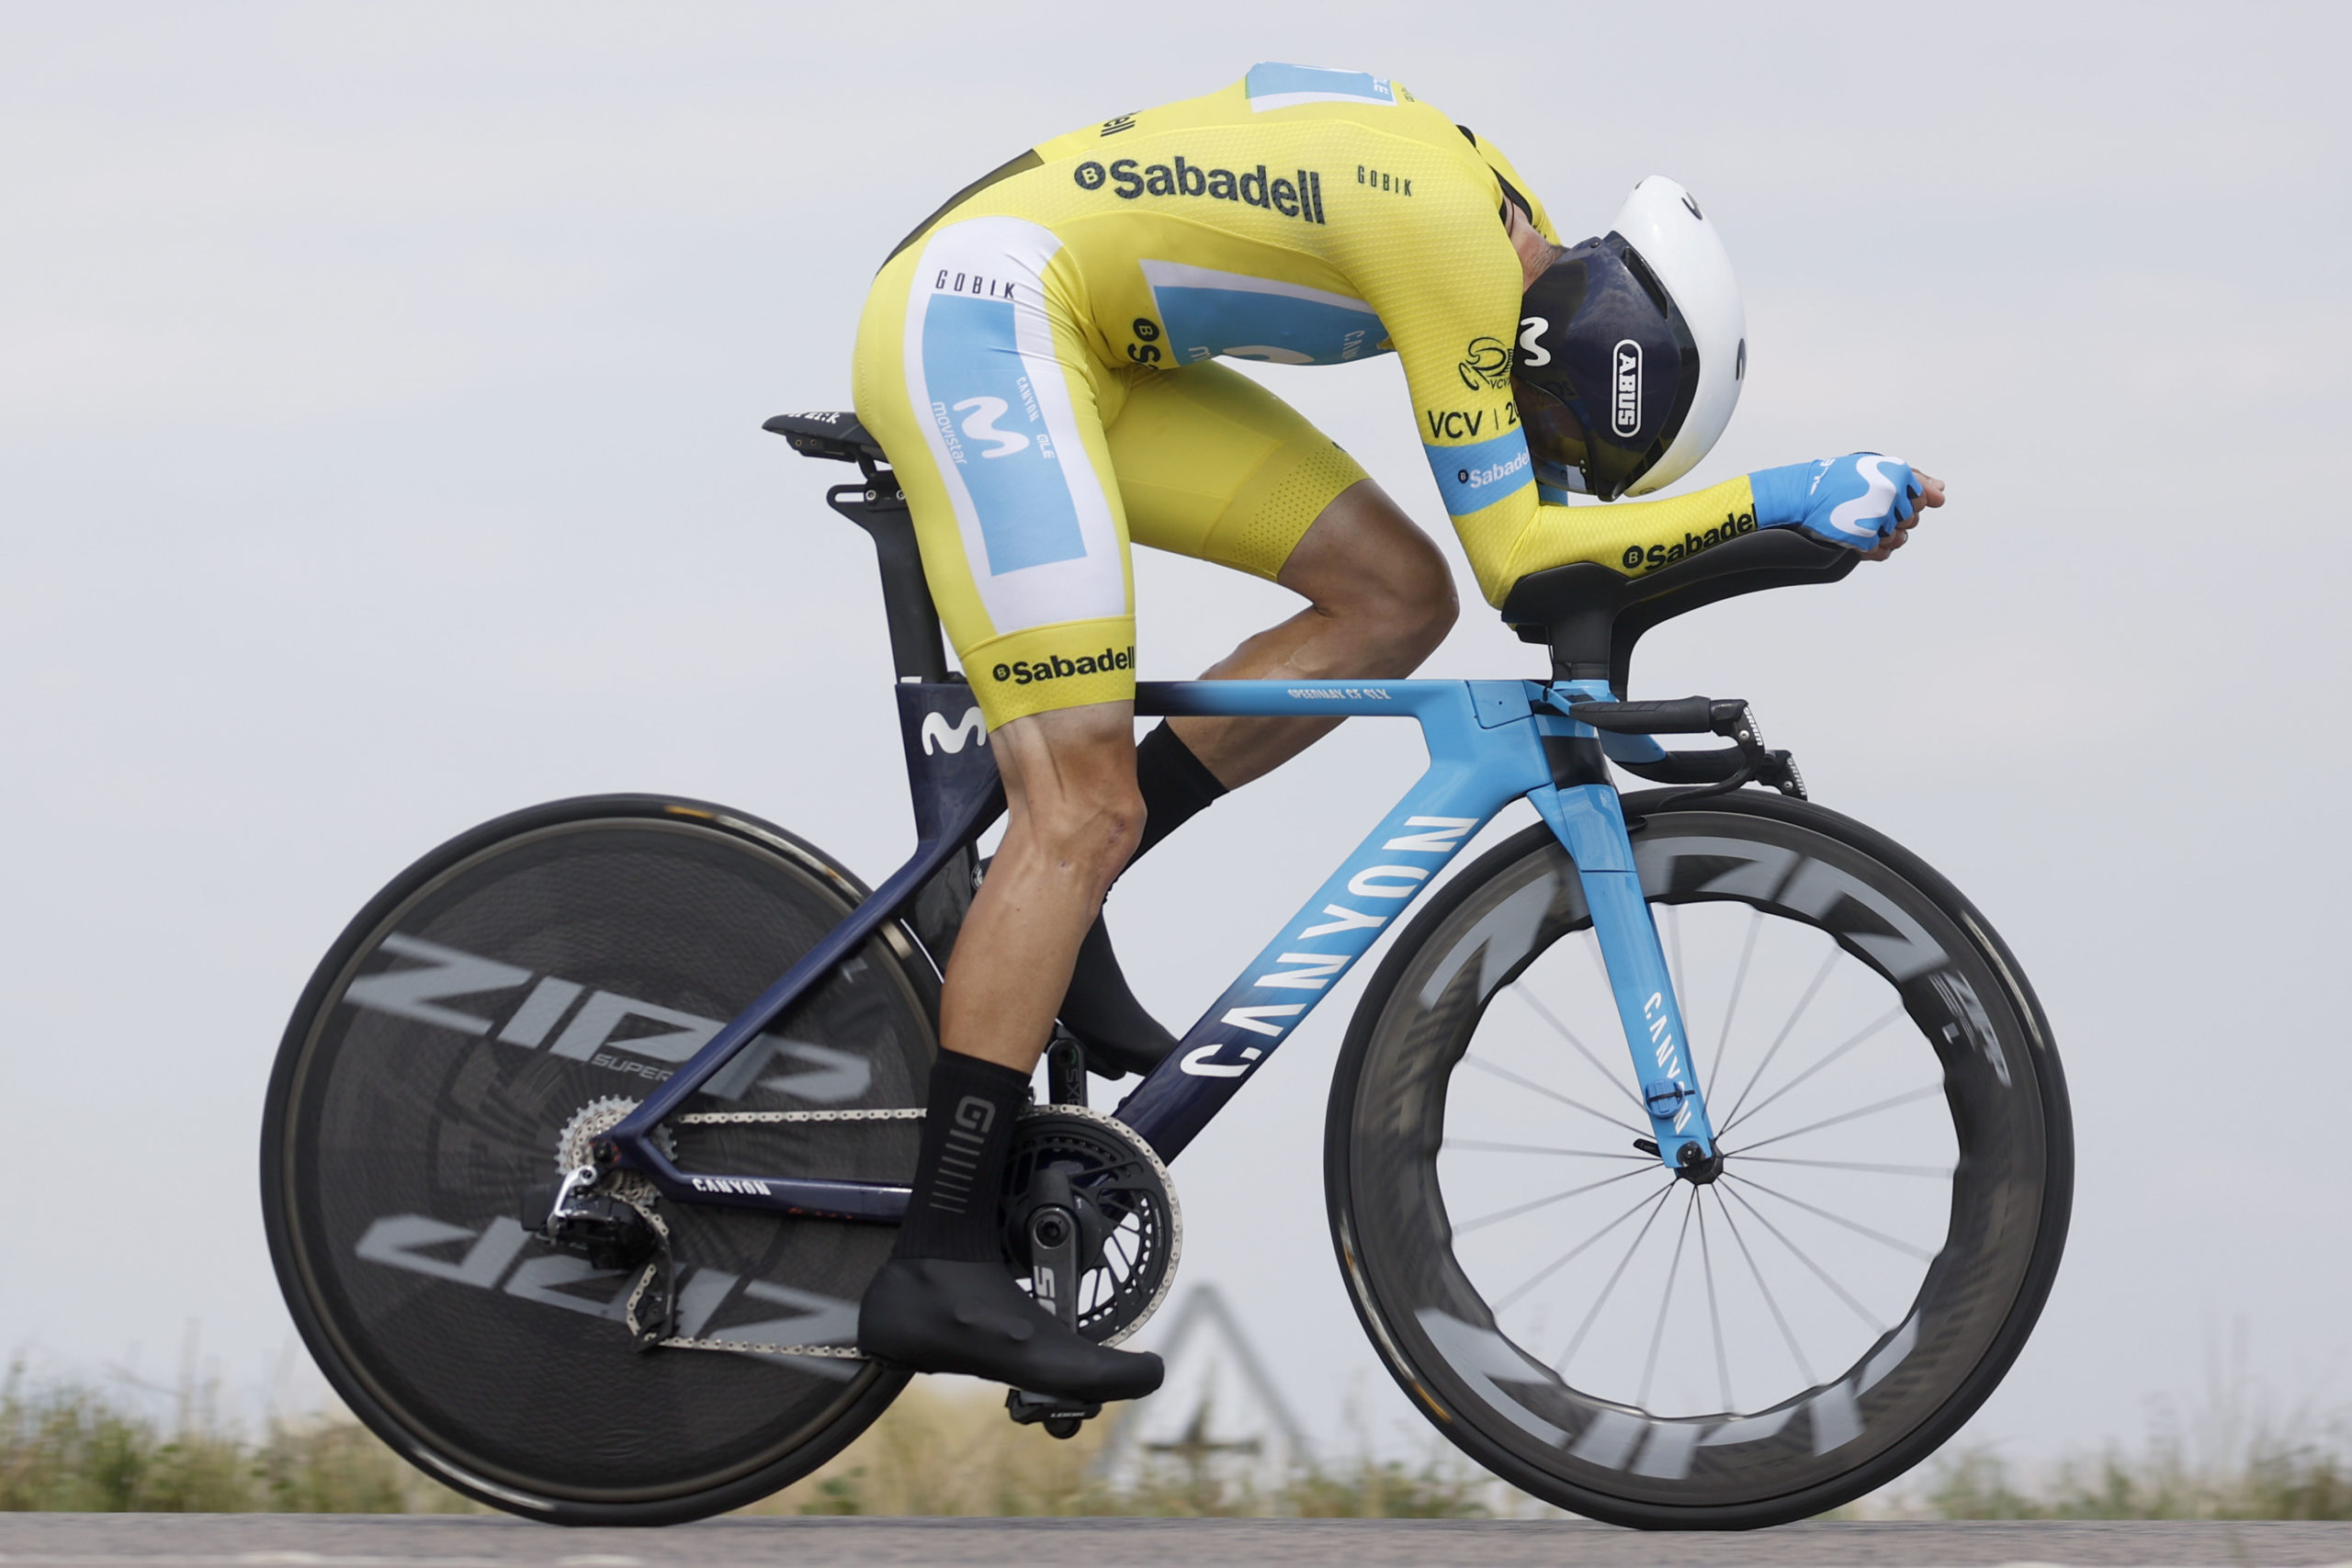 Puncture erases Enric Mas' GC chance at Vuelta CV TT | Movistar Team